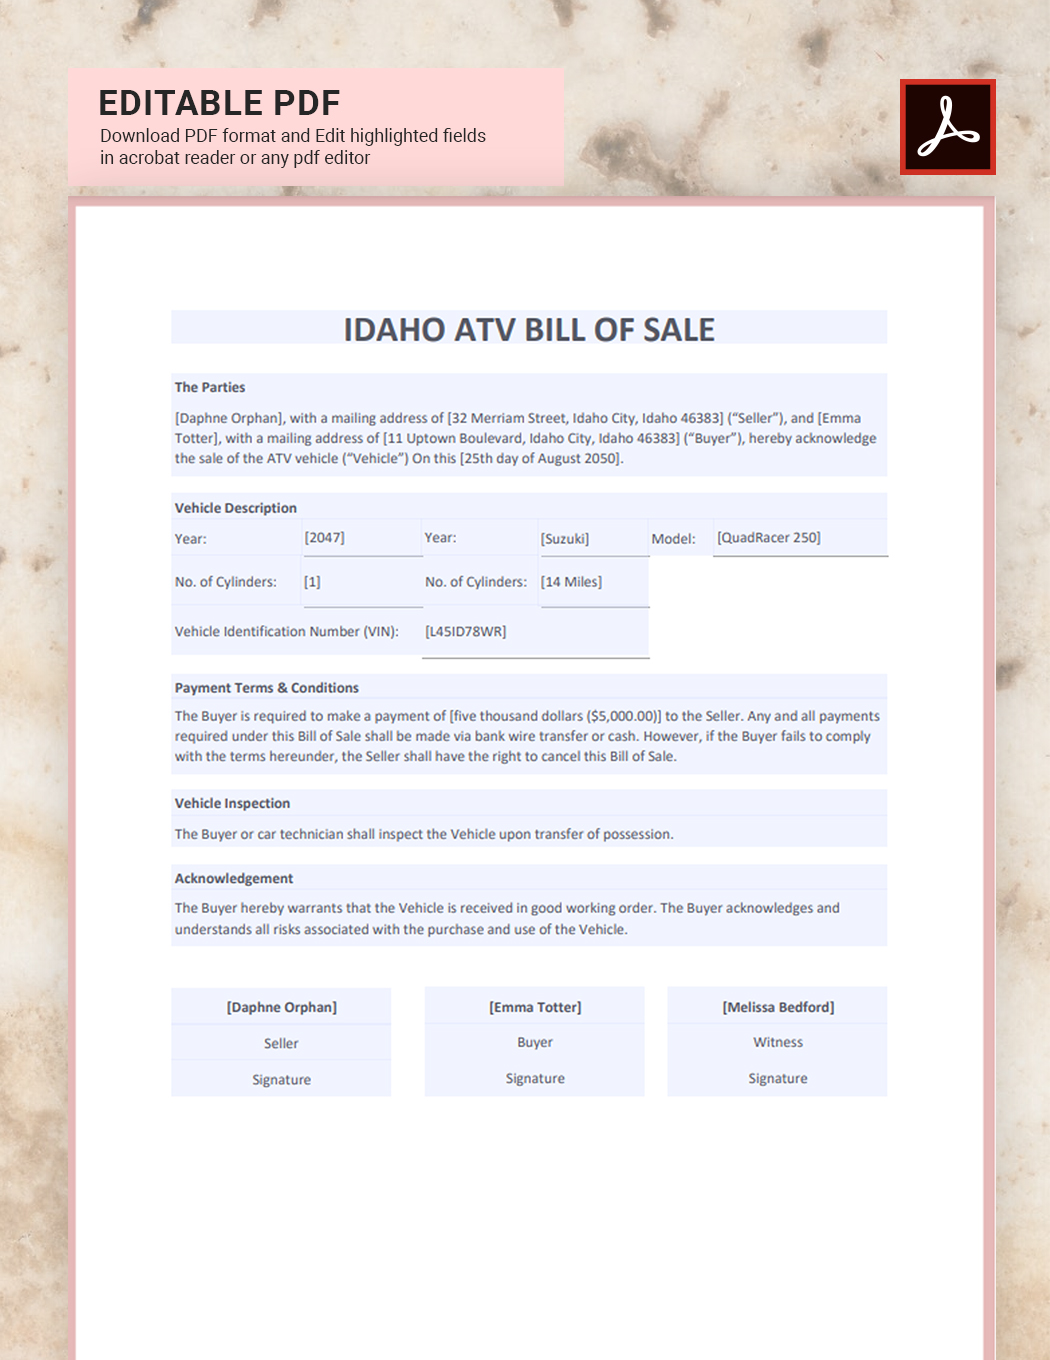 Idaho ATV Bill of Sale Template